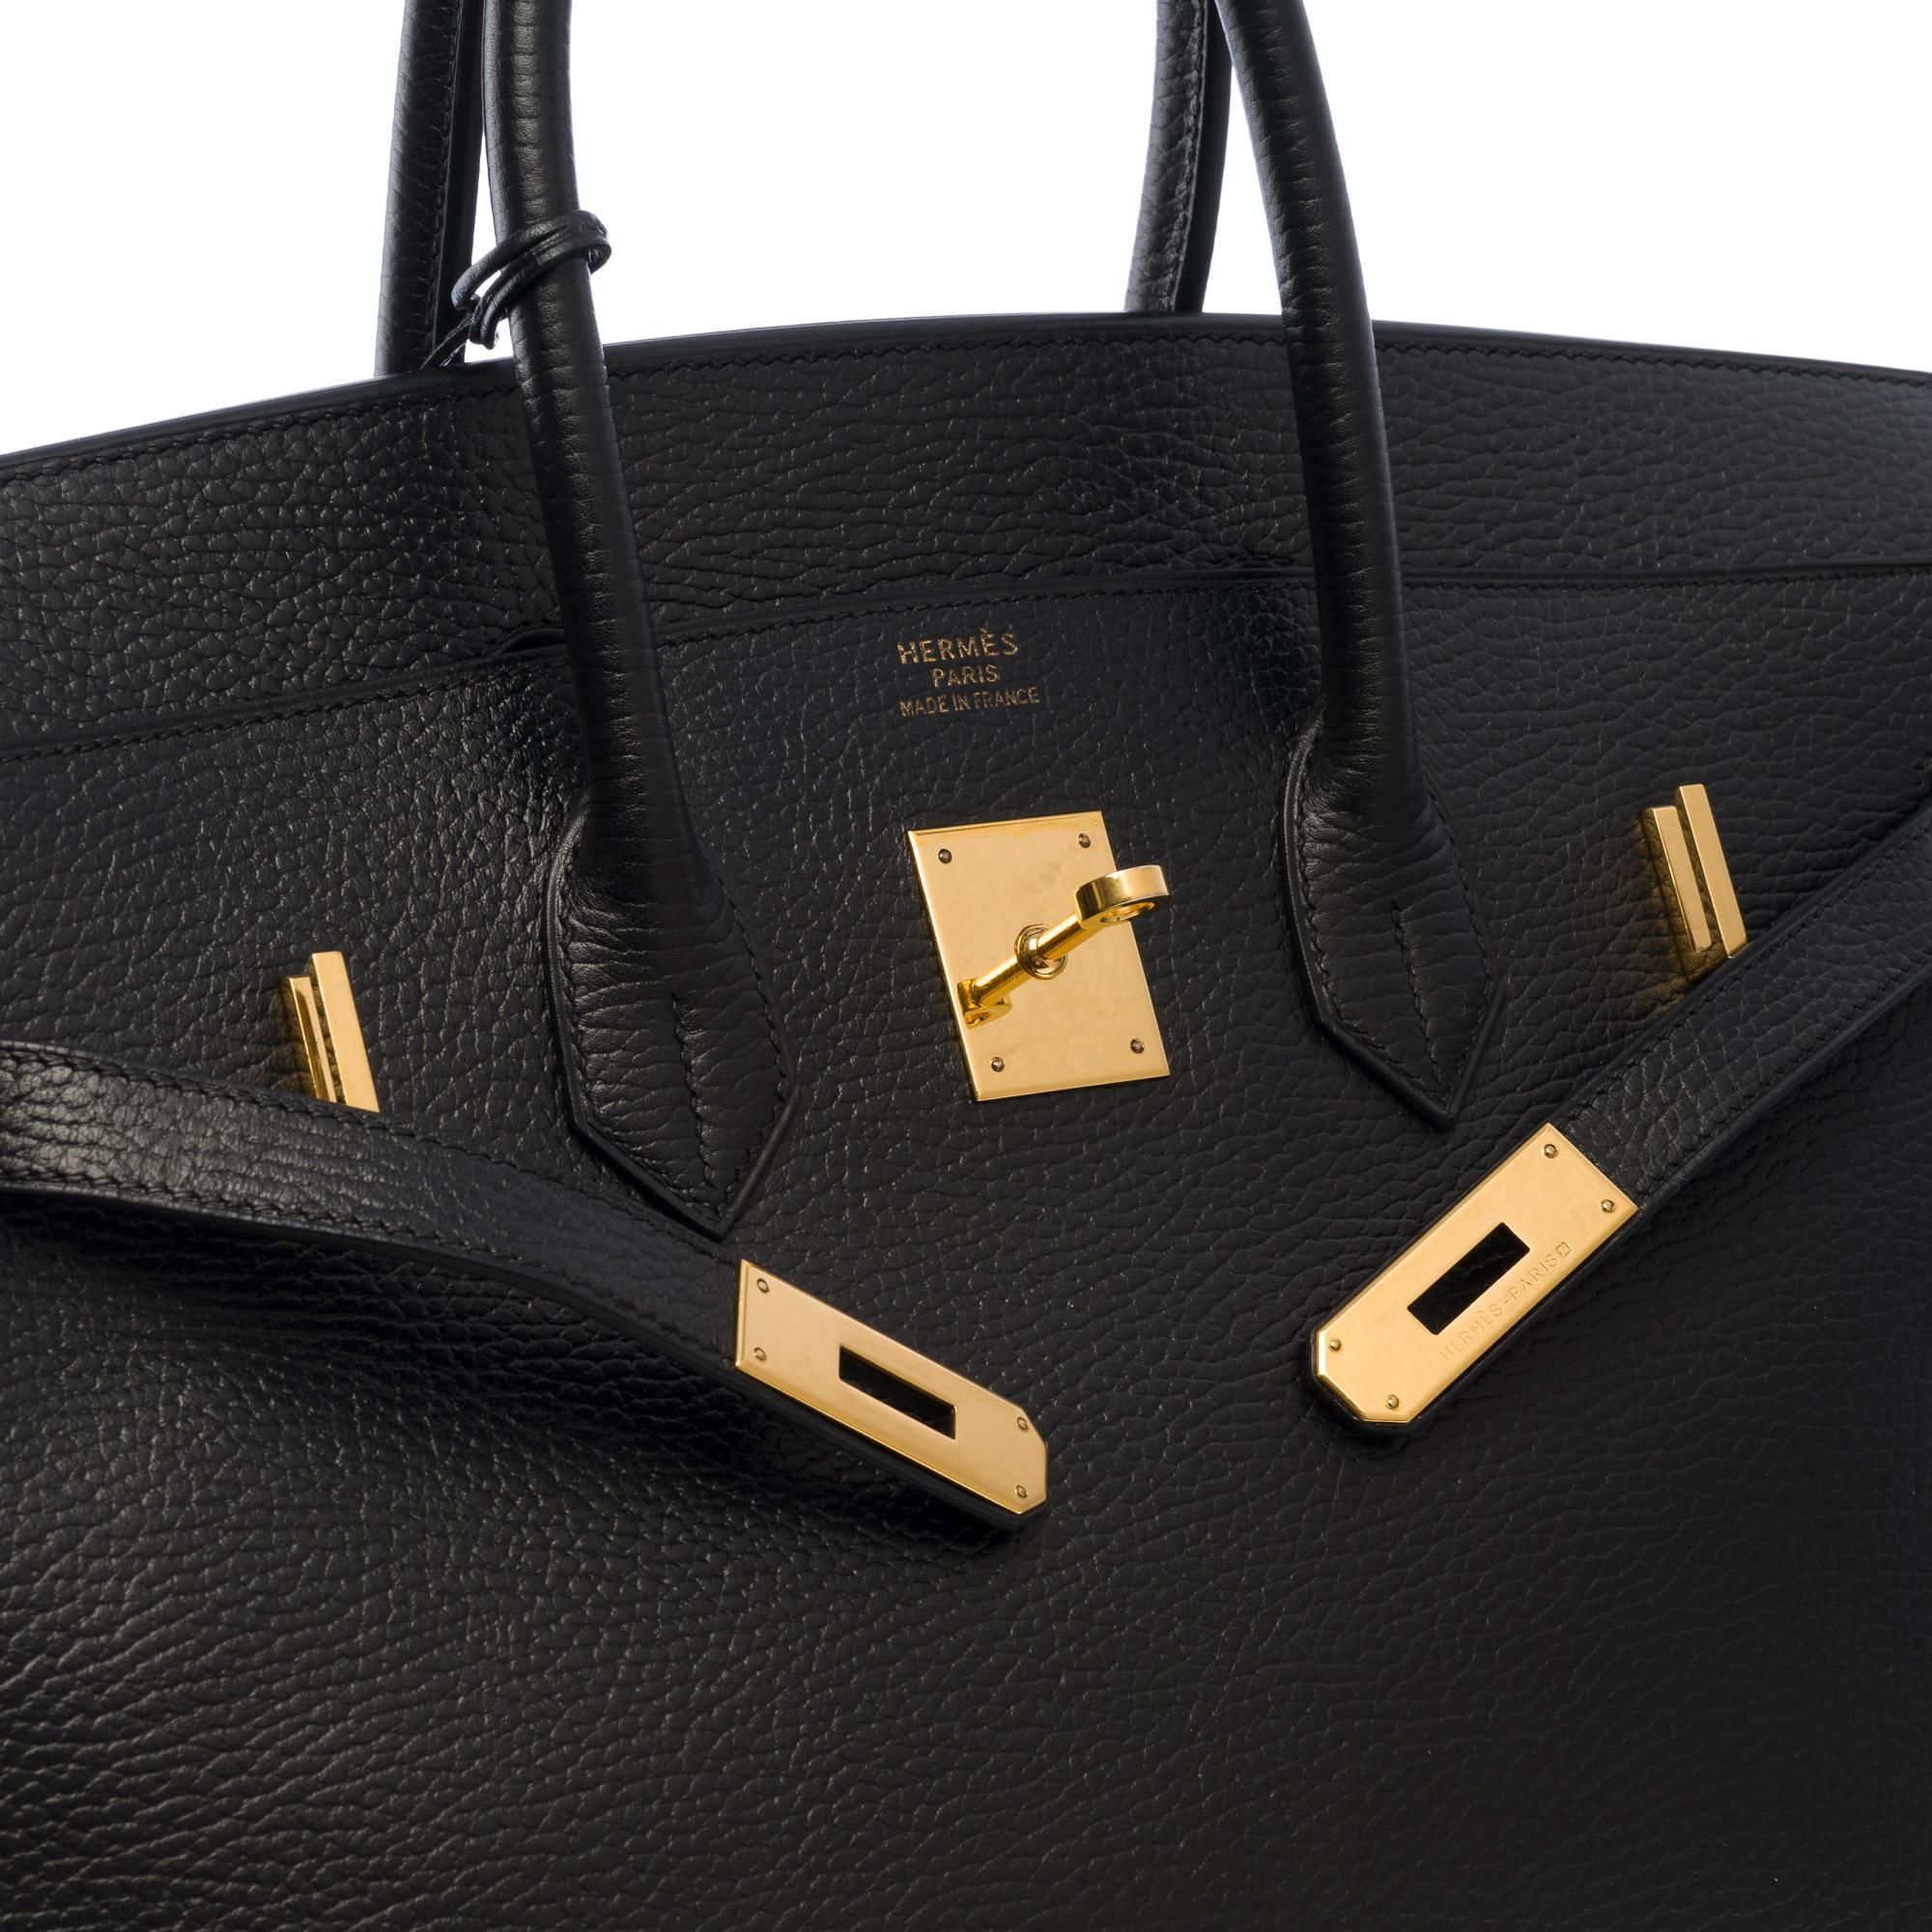 Amazing Hermès Birkin 35 handbag in black Togo leather, GHW 1